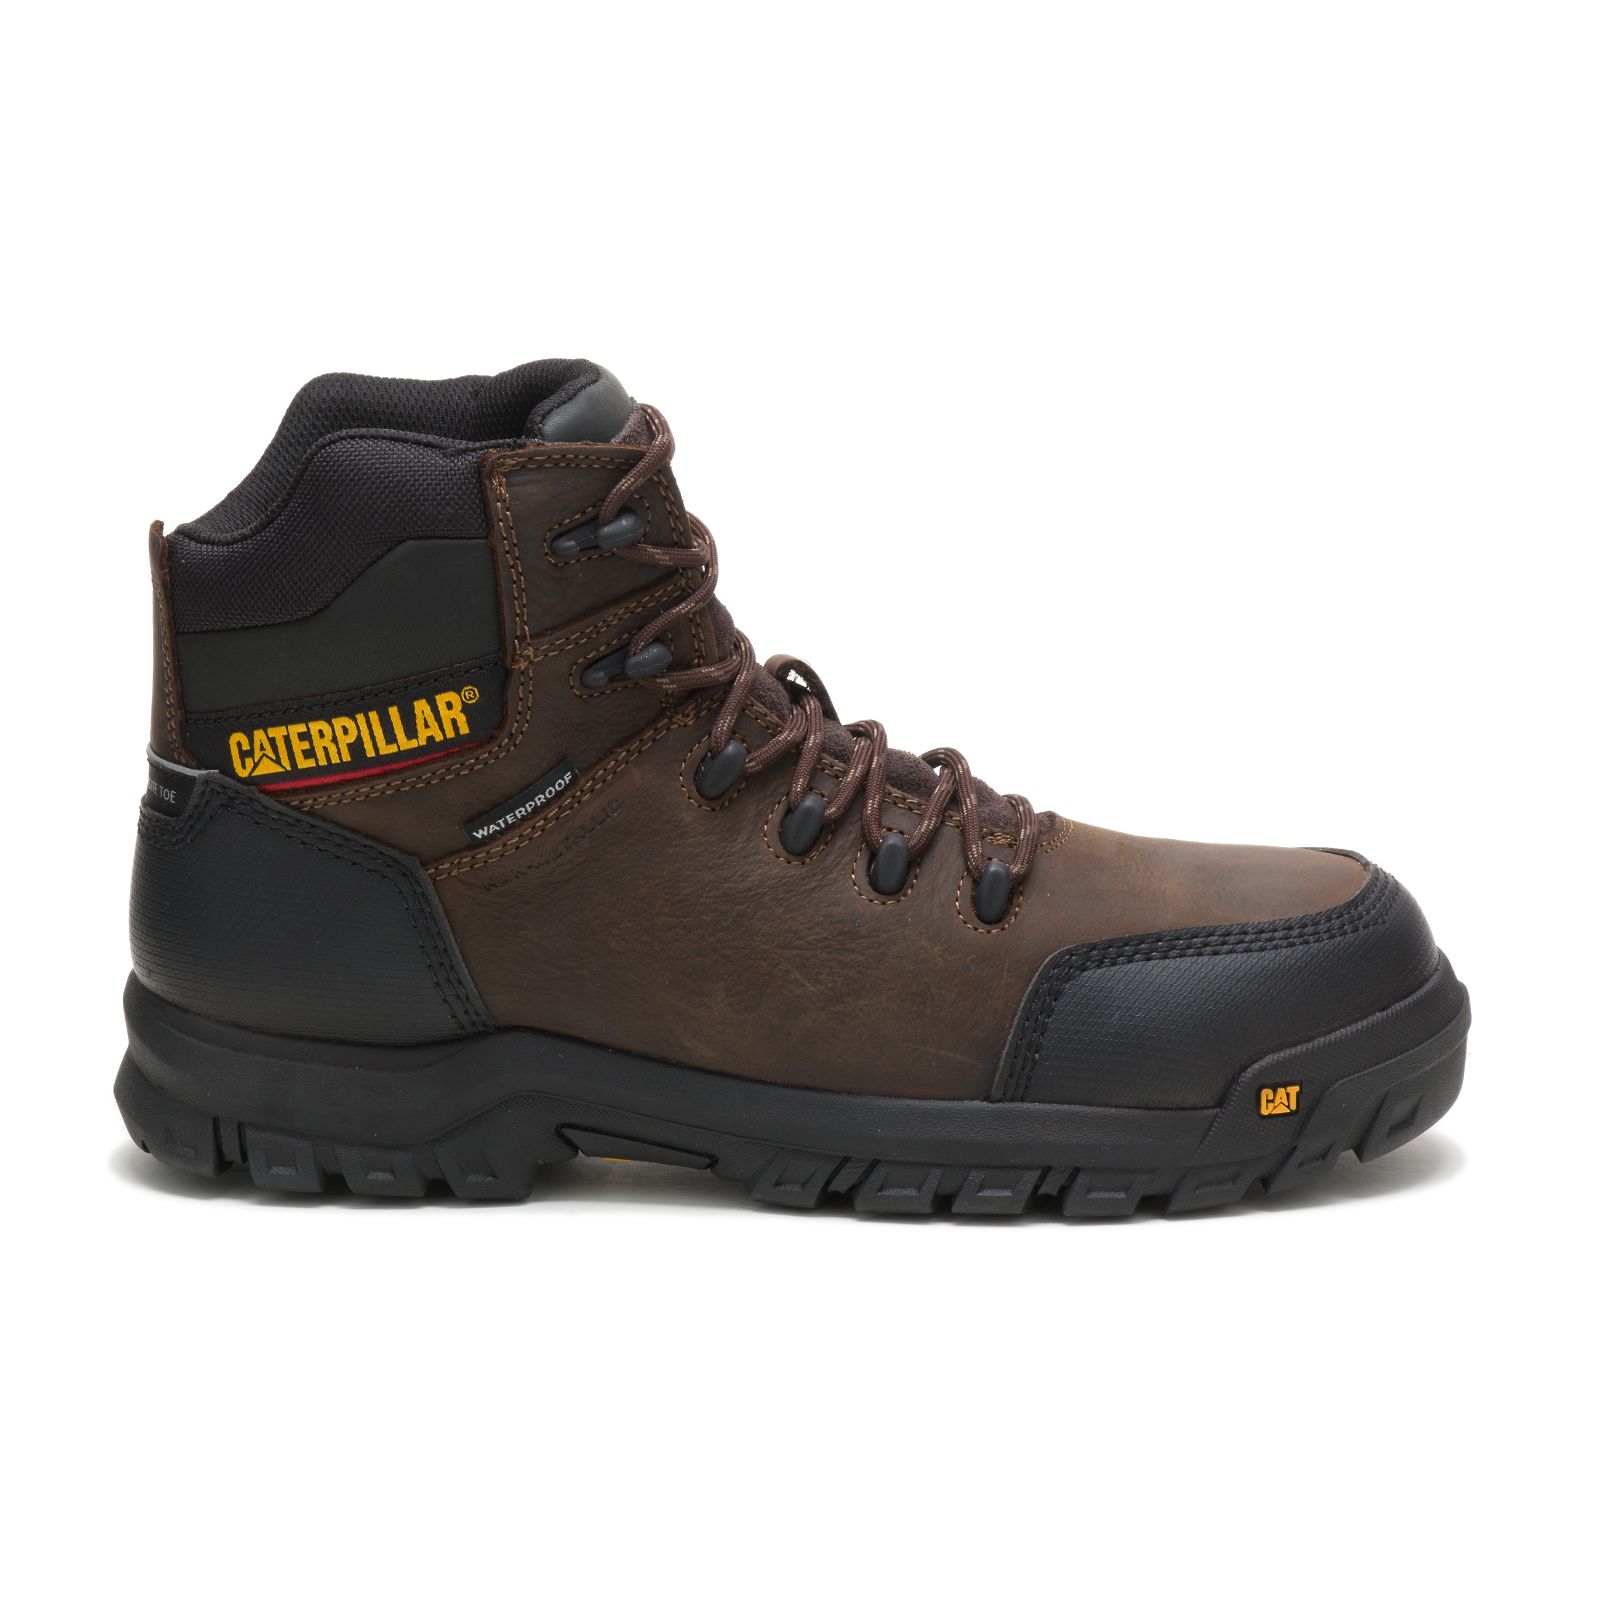 Caterpillar Resorption Waterproof Composite Toe - Mens Work Boots - Brown - NZ (063RDETFK)